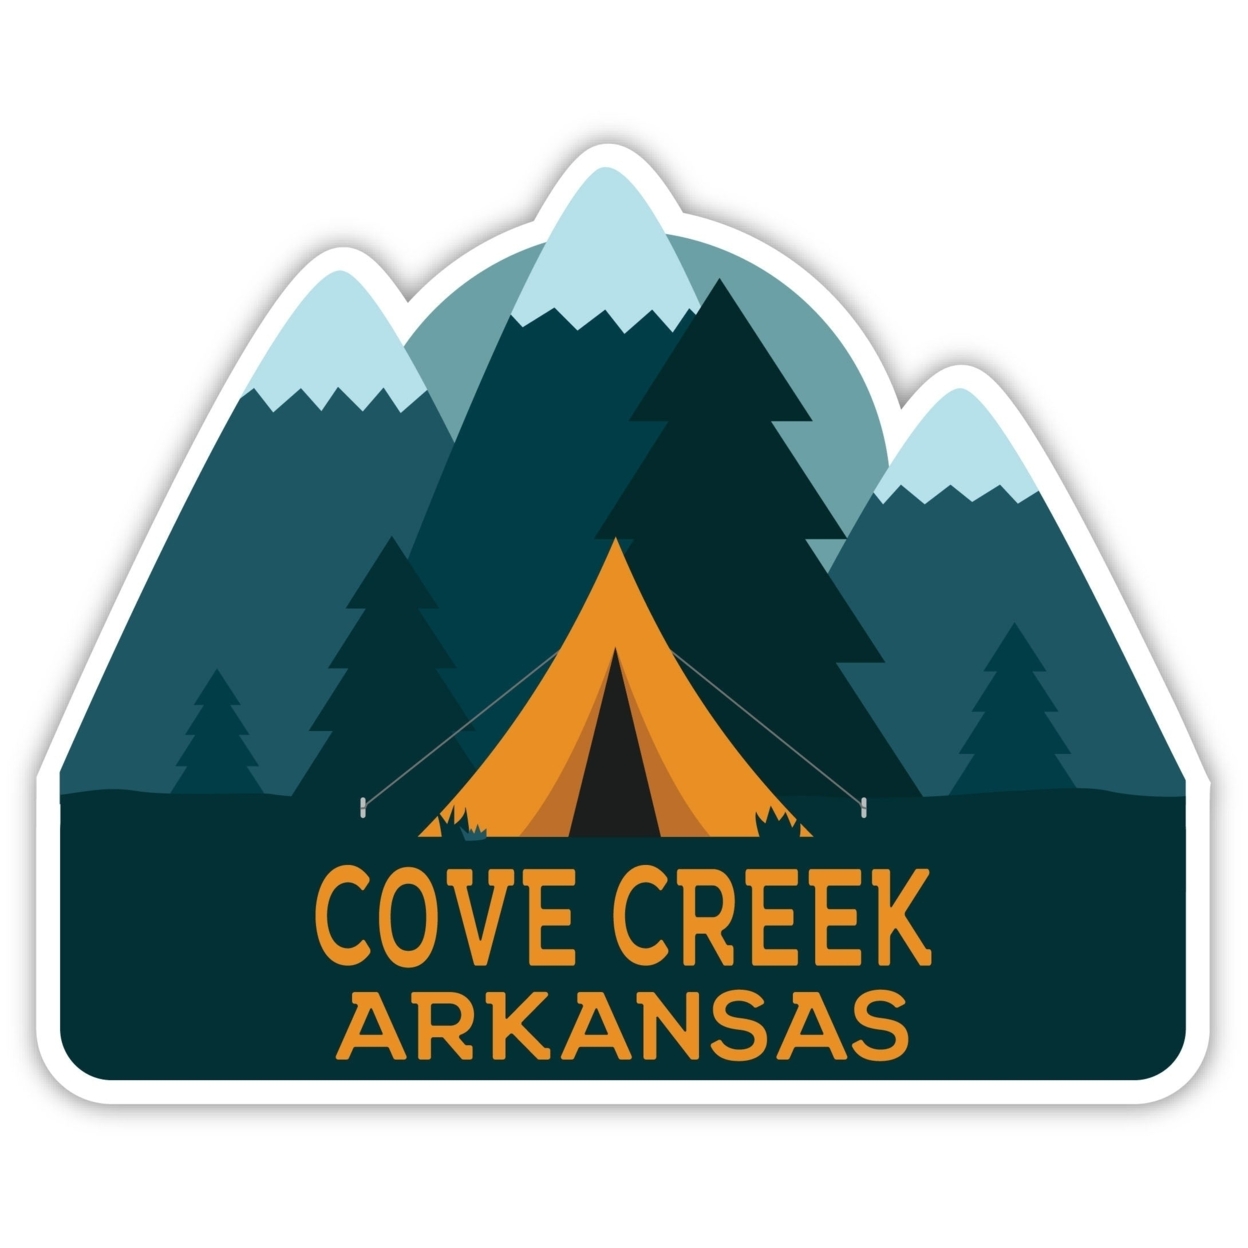 Cove Creek Arkansas Souvenir Decorative Stickers (Choose Theme And Size) - 4-Pack, 2-Inch, Tent